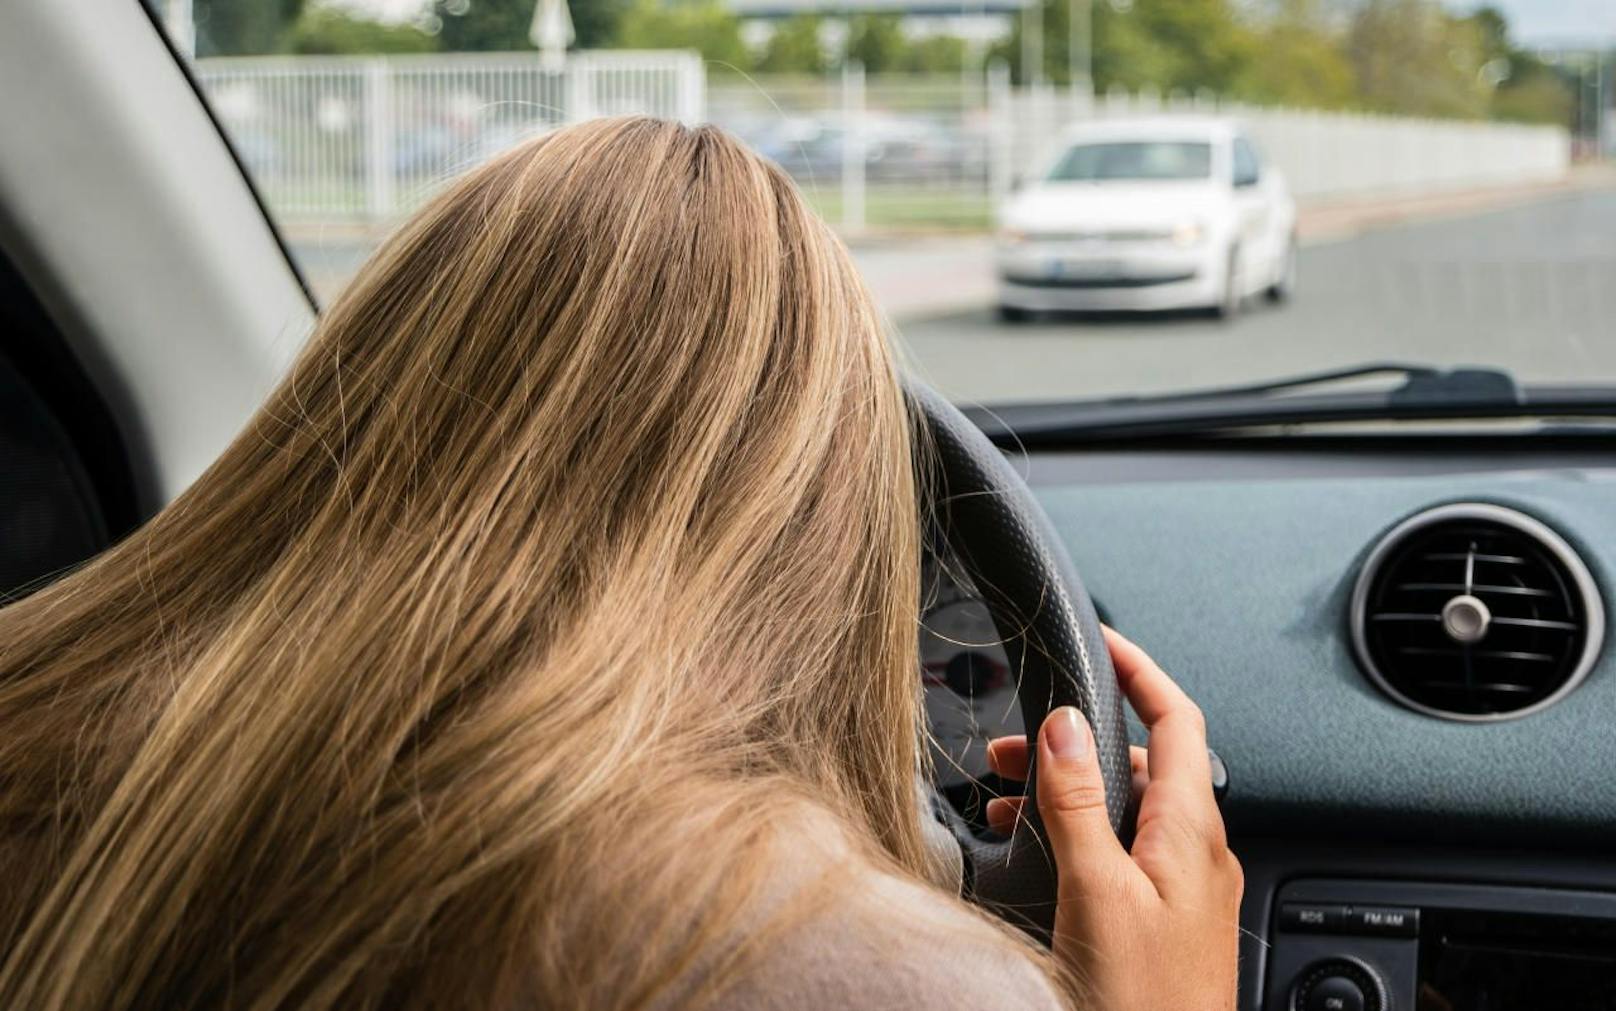 "Bessere Fahrerin" – 14-jähriges Mädchen lenkte Auto